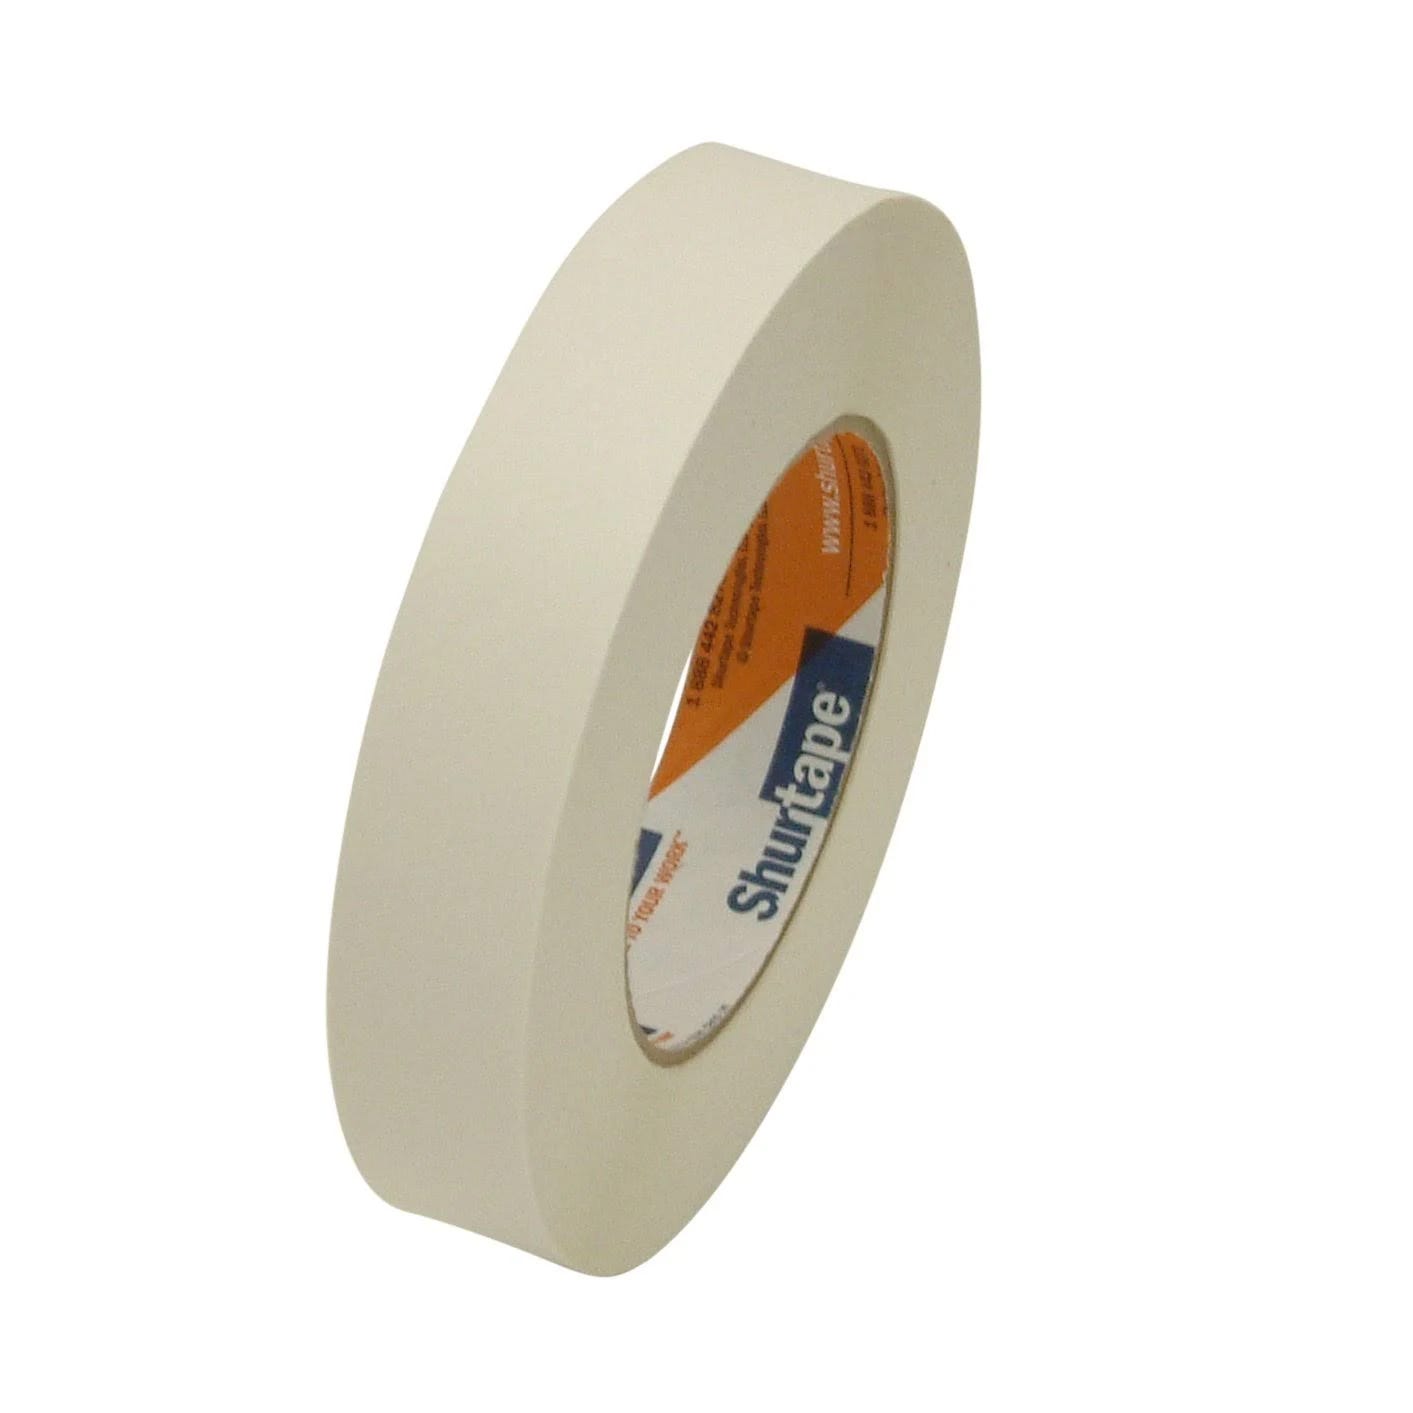 Shurtape Flatback Paper Tape (1 inch x 60 yards) - White | Image